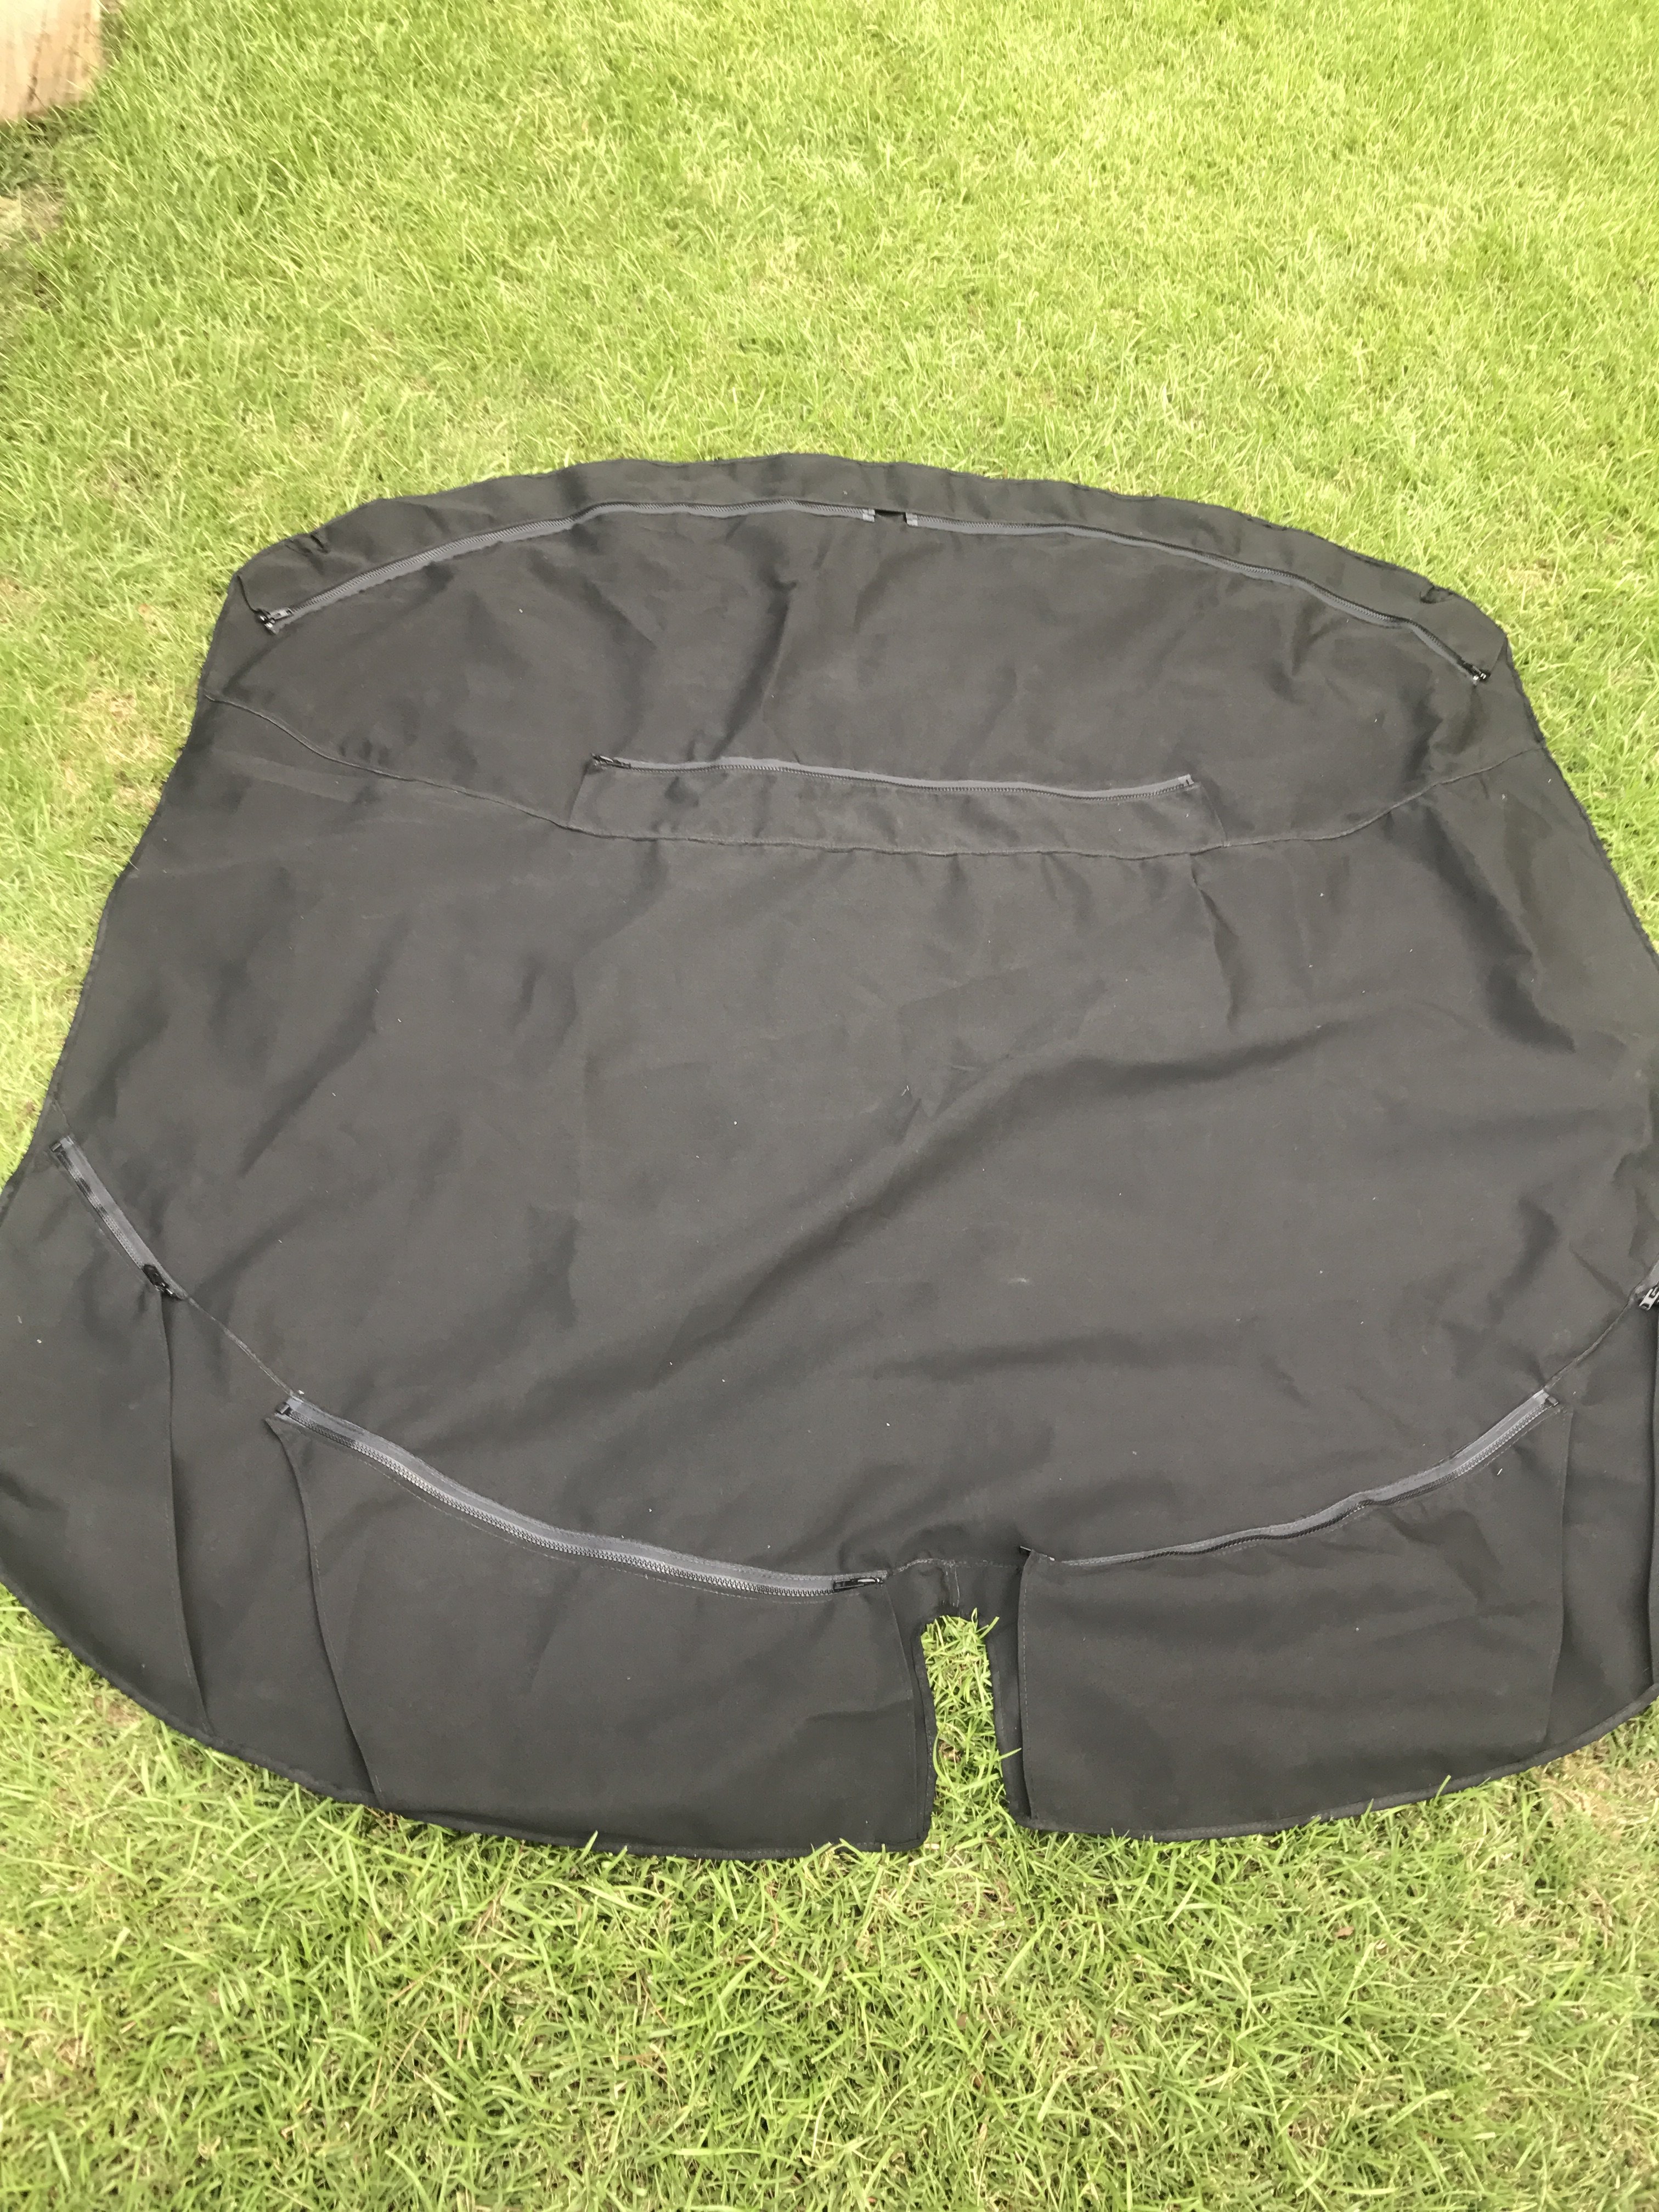 Bimini replacement in black Sunbrella with added zippers.